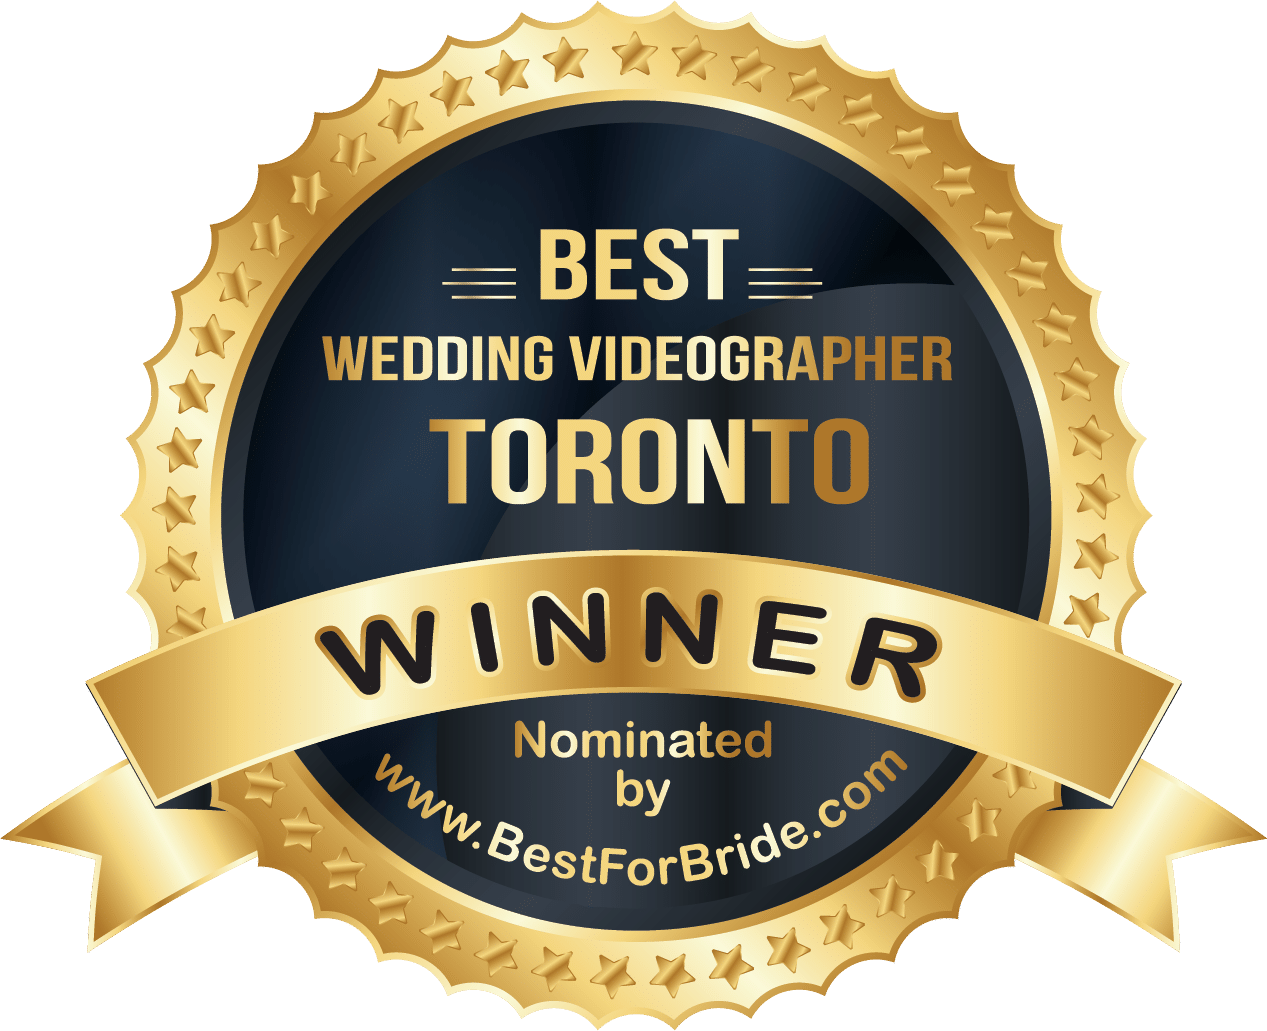 Best Wedding Videographer Toronto badge